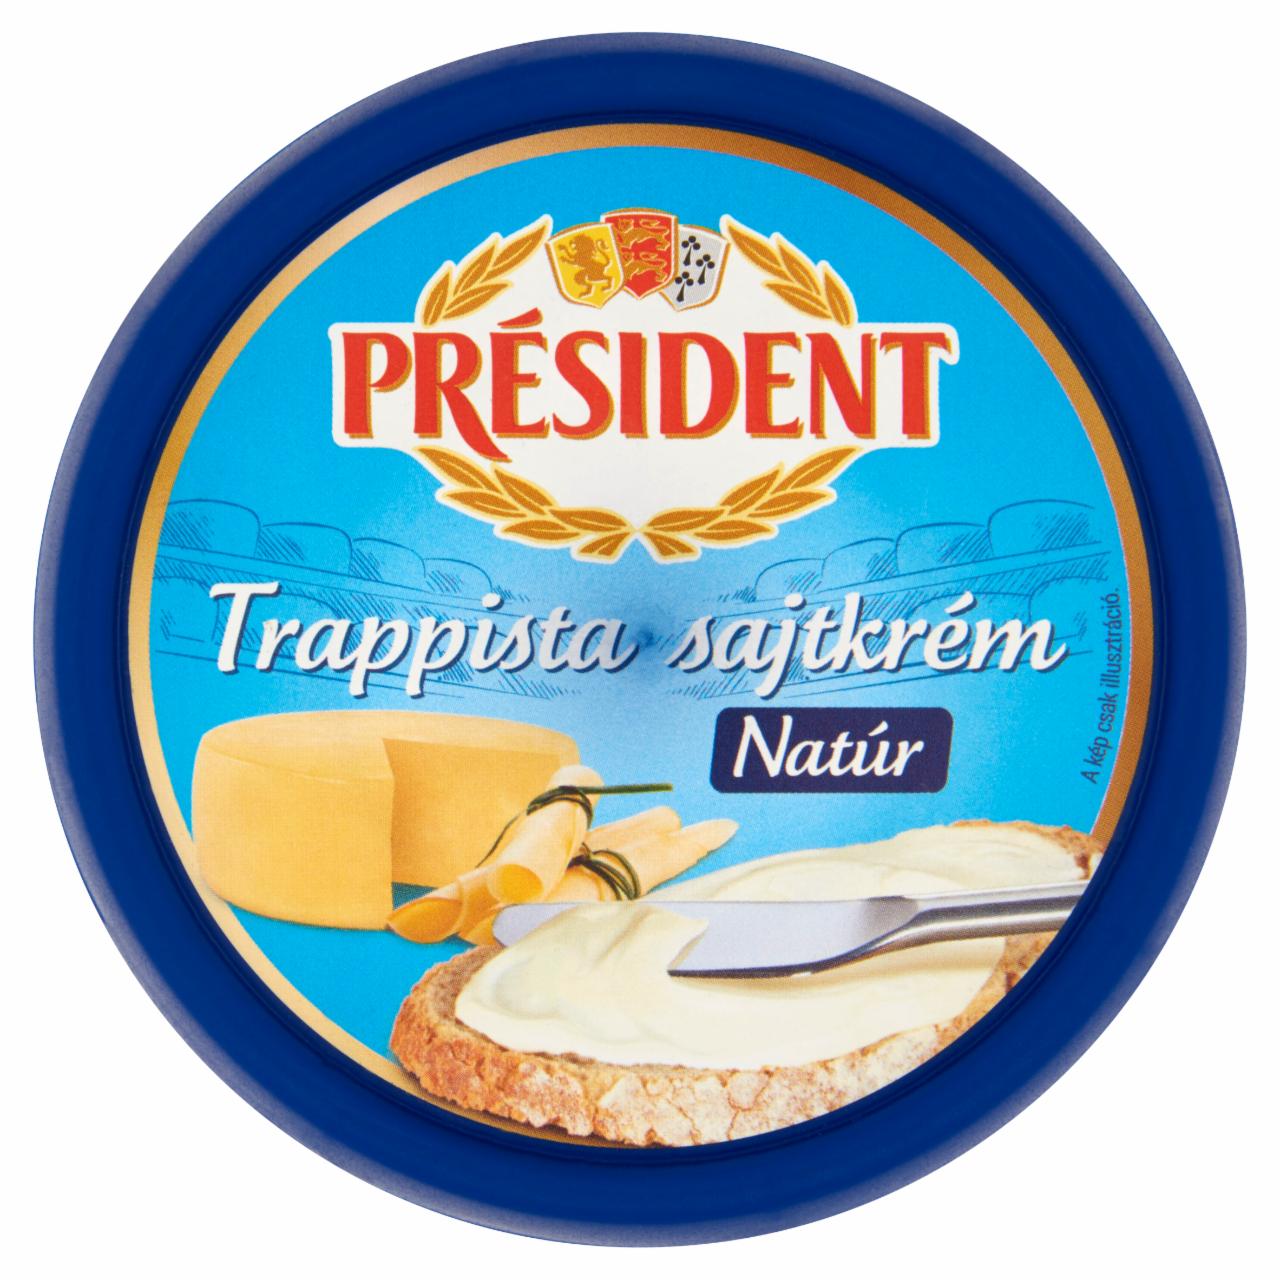 Képek - Président natúr trappista sajtkrém 125 g